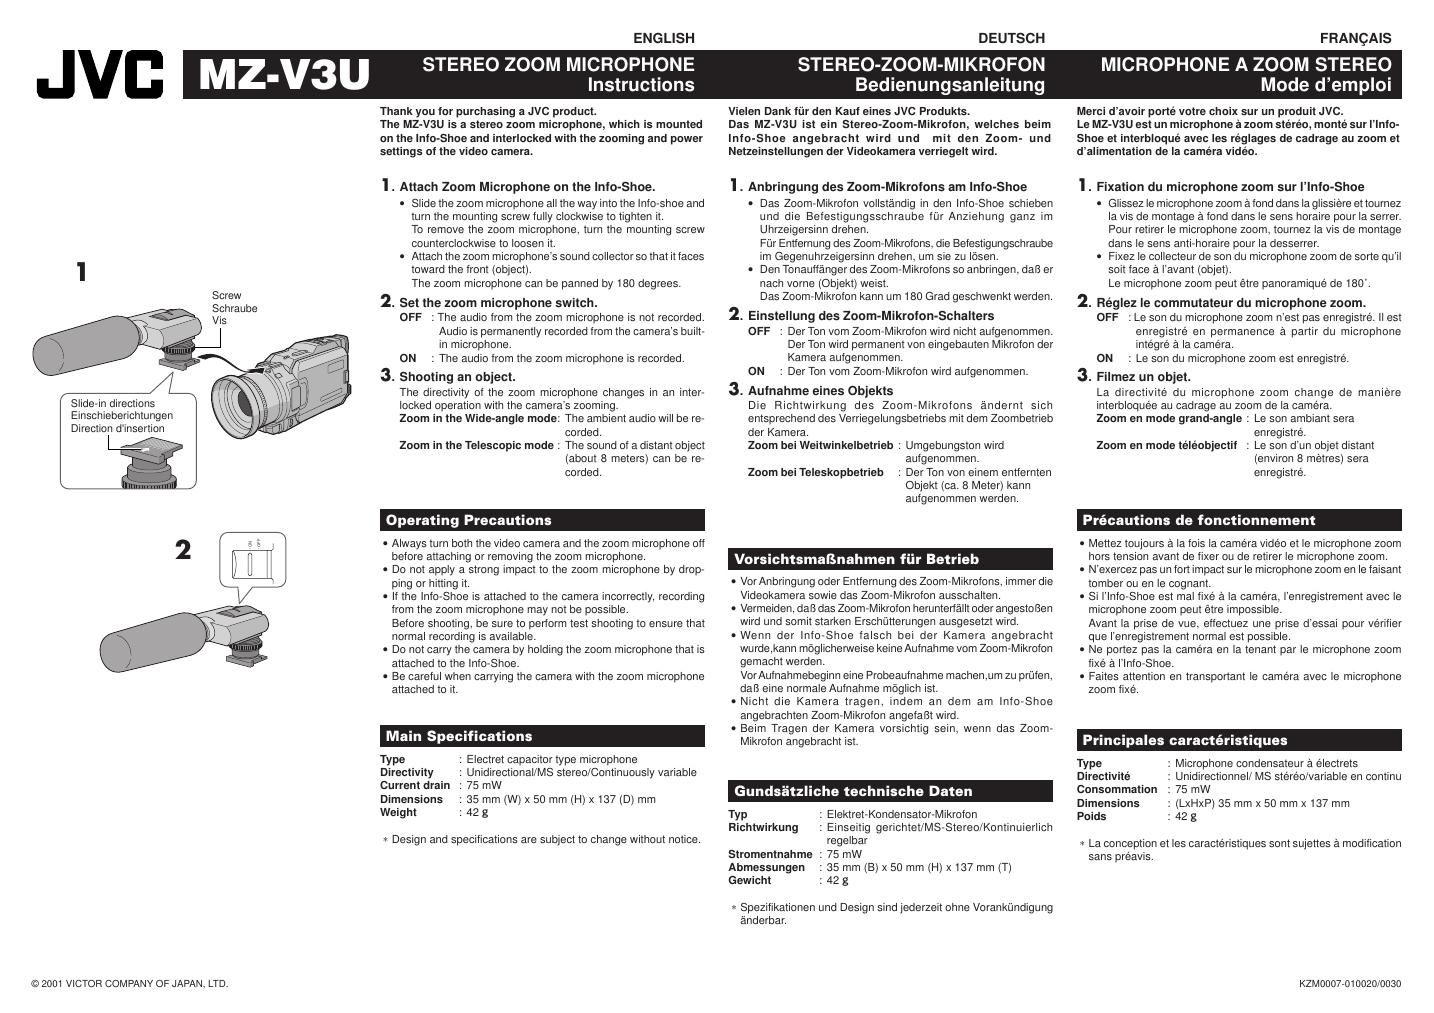 Jvc MZV 3 UE Owners Manual